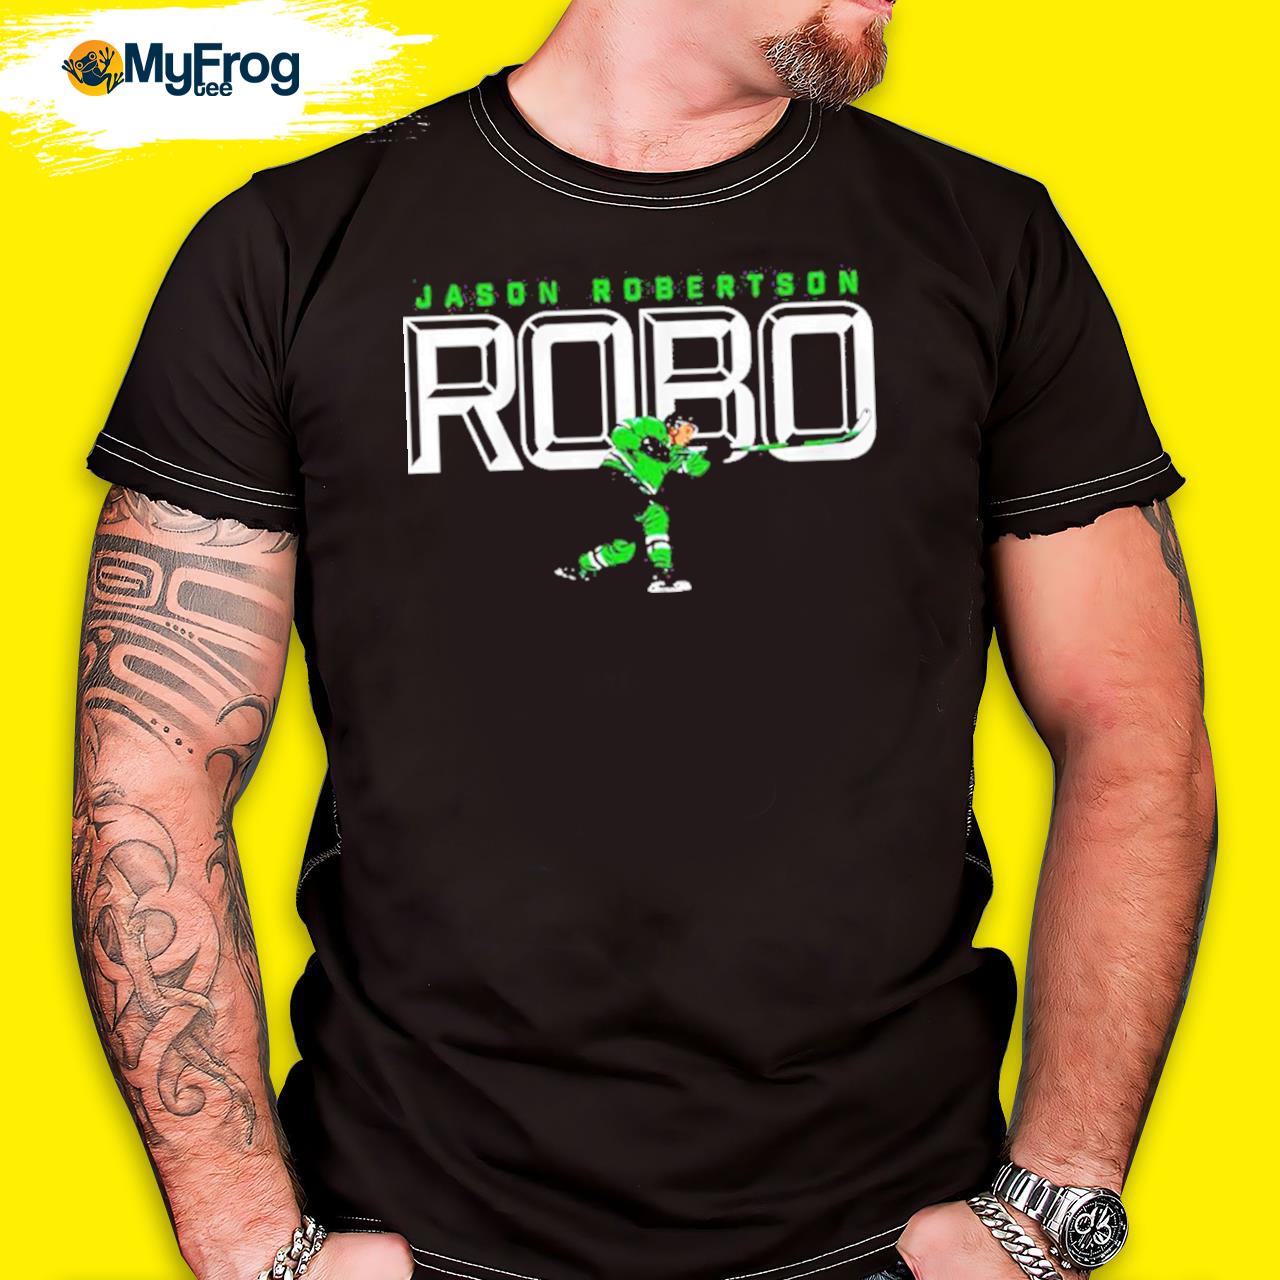 Jason Robertson Robo Shirt